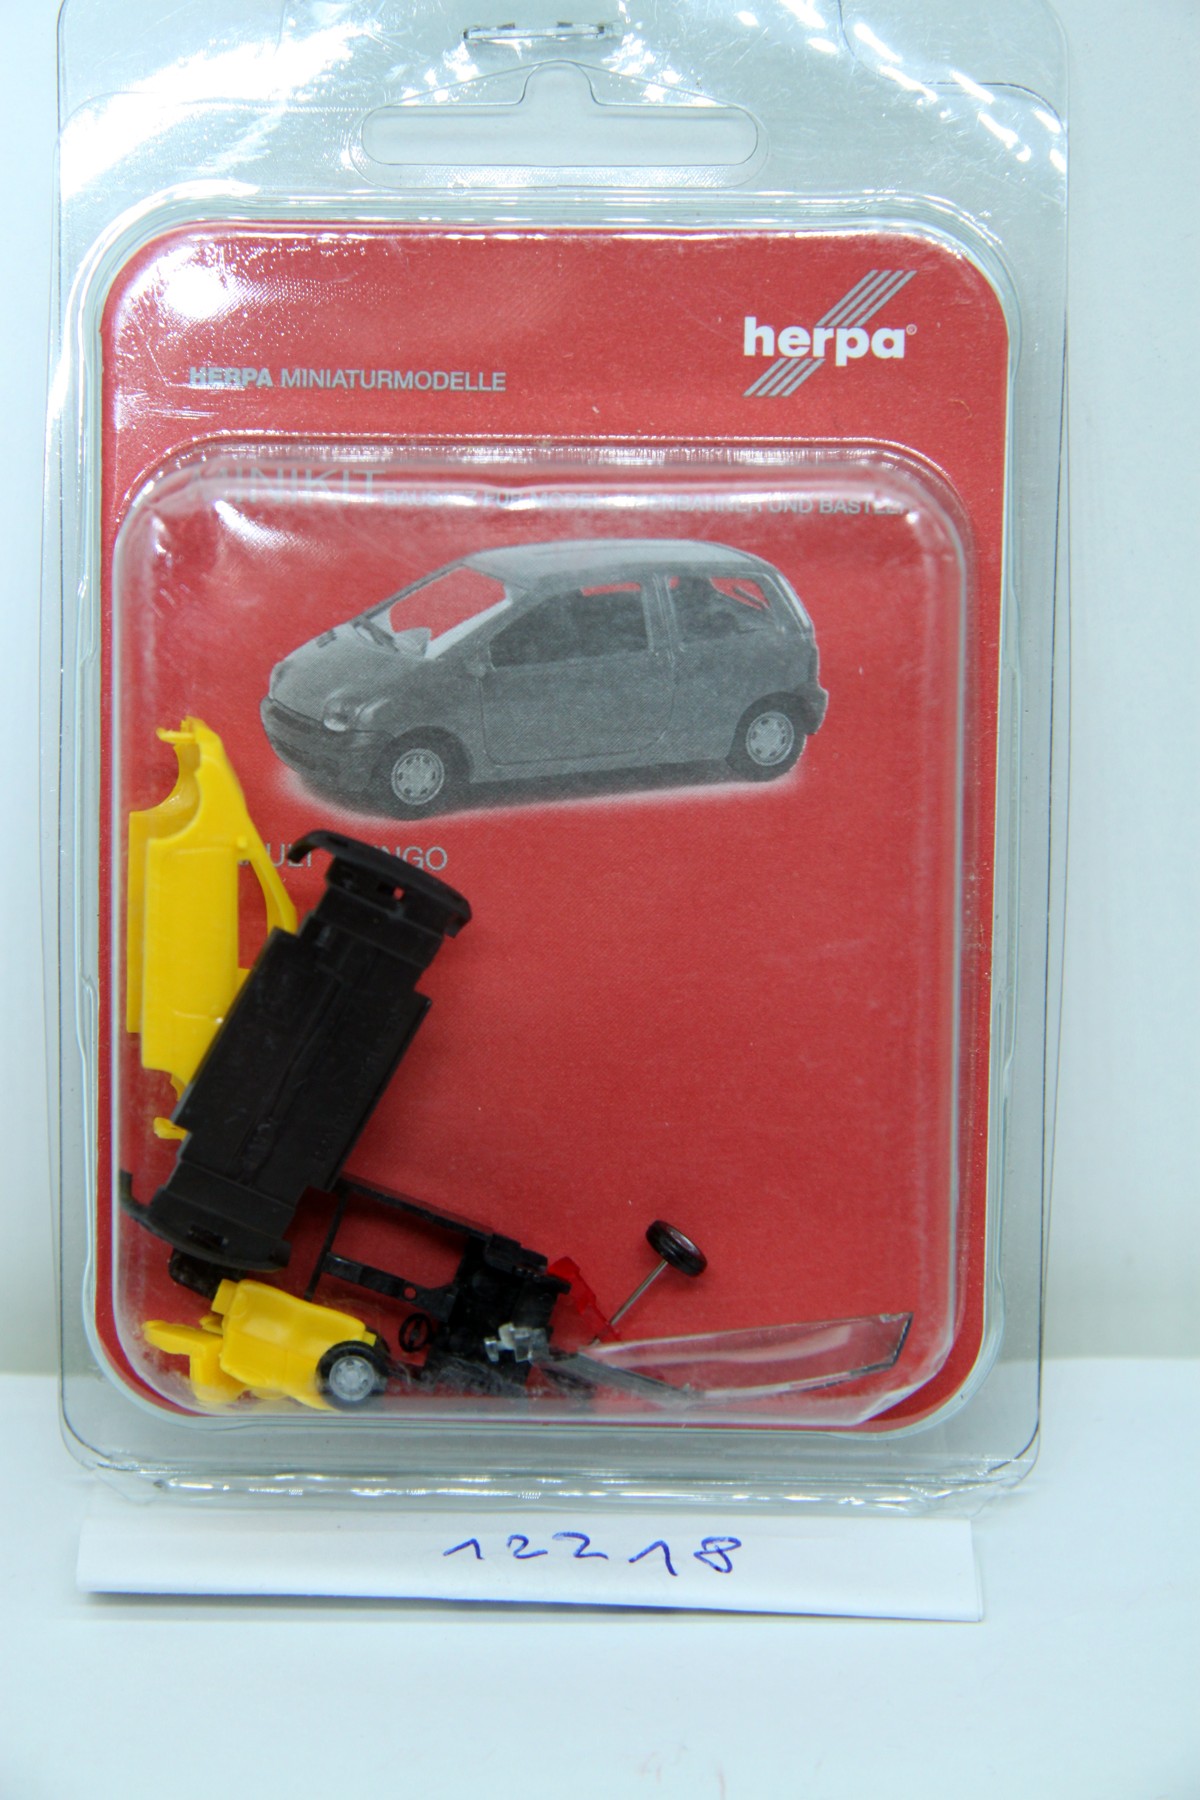 Herpa 012218 MiniKit: Renault Twingo, yellow, for H0 gauge, with original box